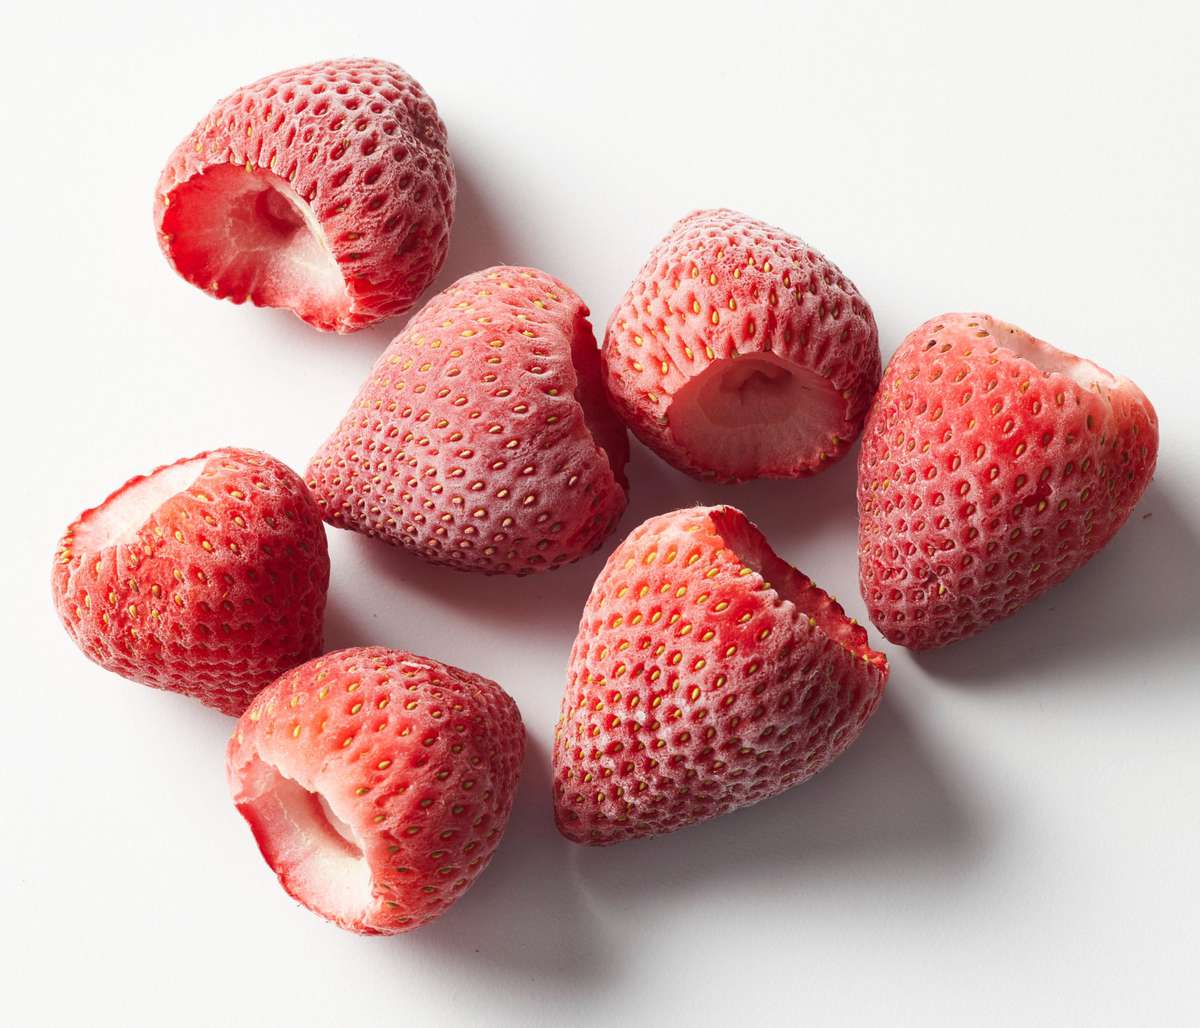 frozen strawberries on a white background